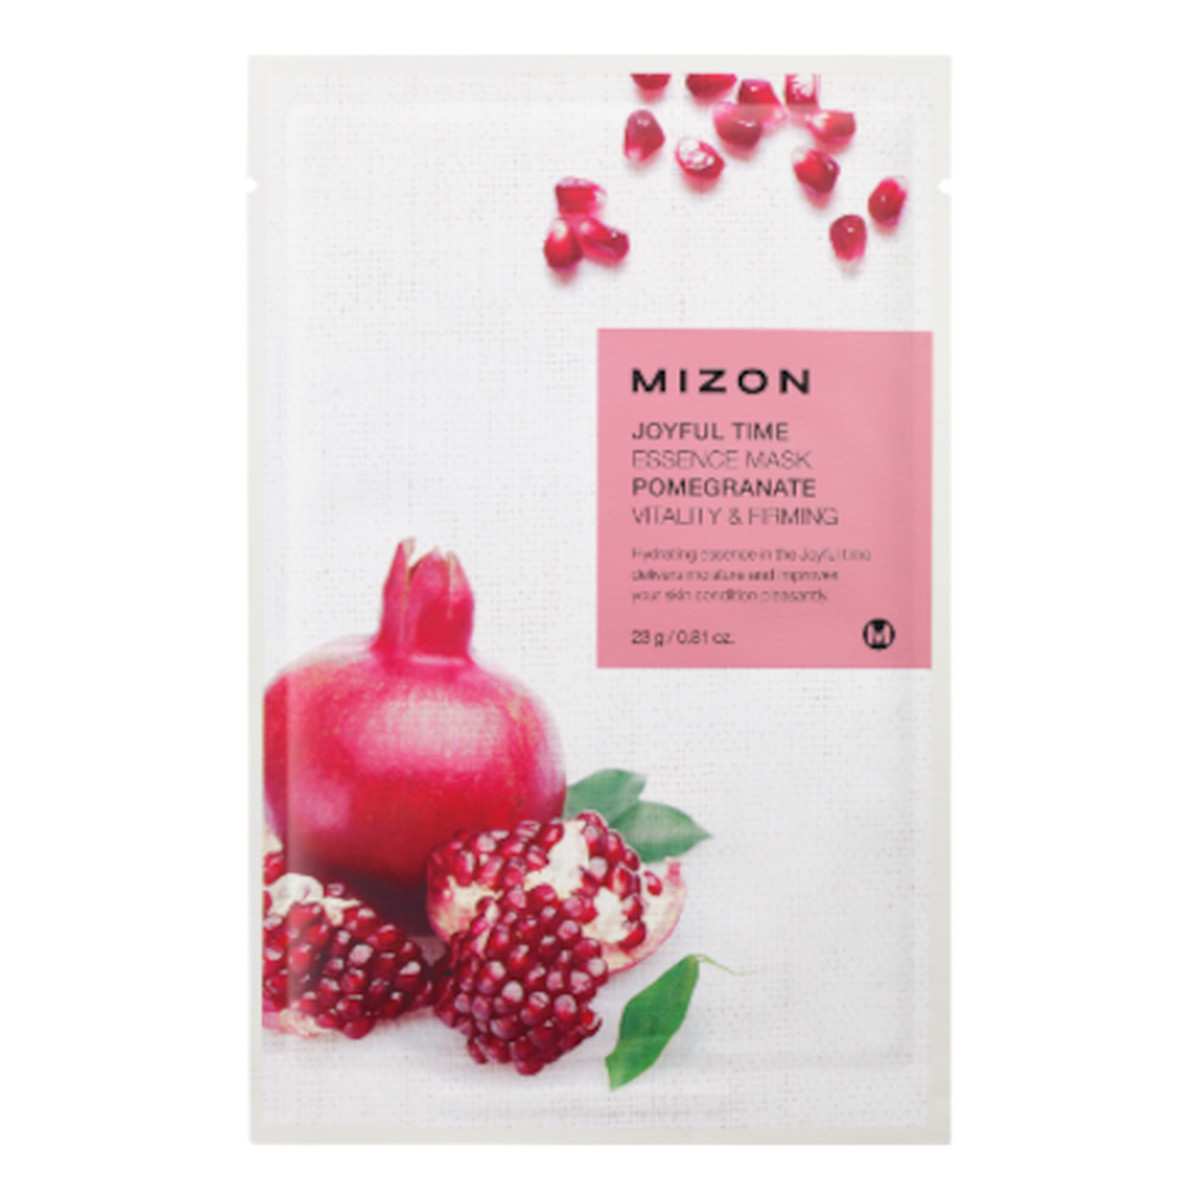 Mizon Joyful Time Essence Maska na płacie bawełny Pomegranate 23g